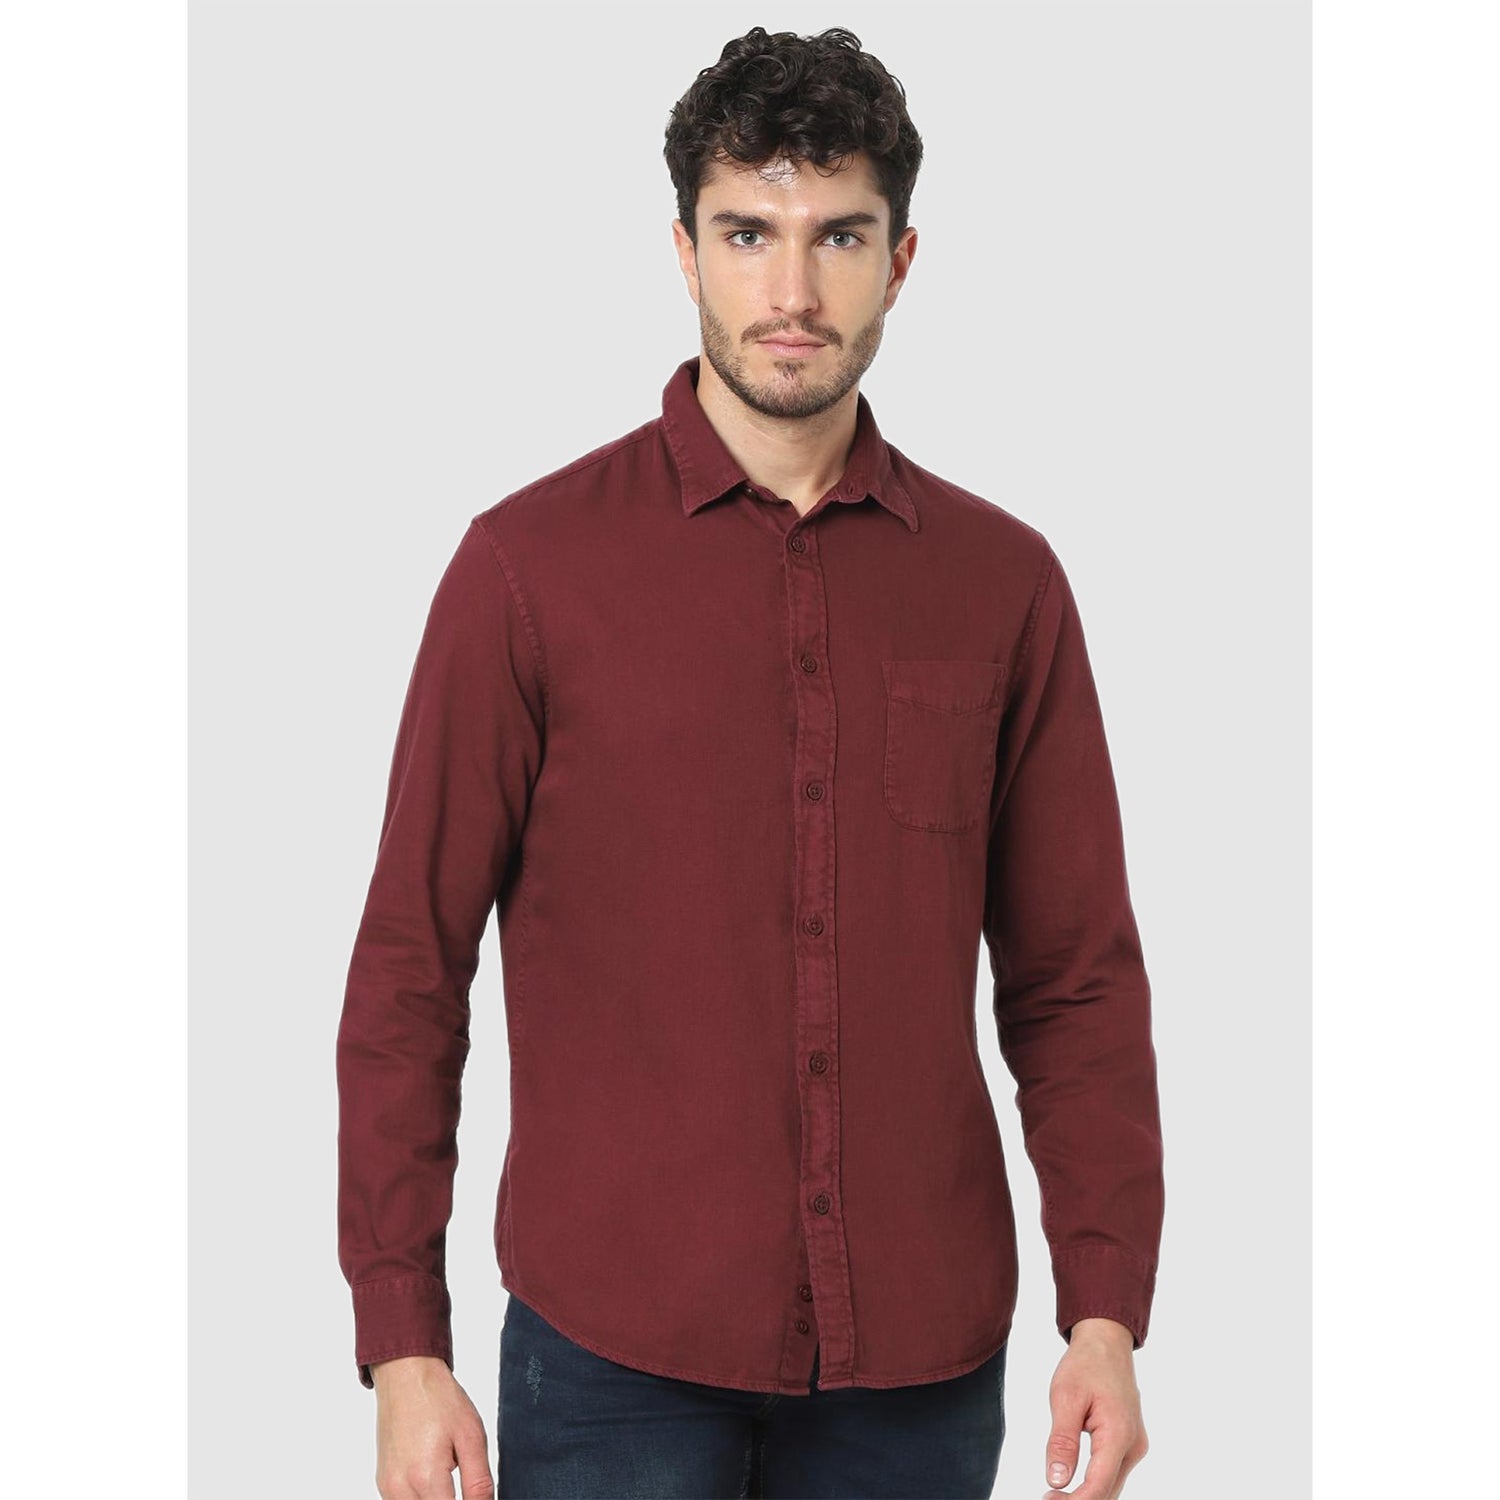 Maroon Solid Long Sleeves Classic Casual Shirt (CAJEAN)